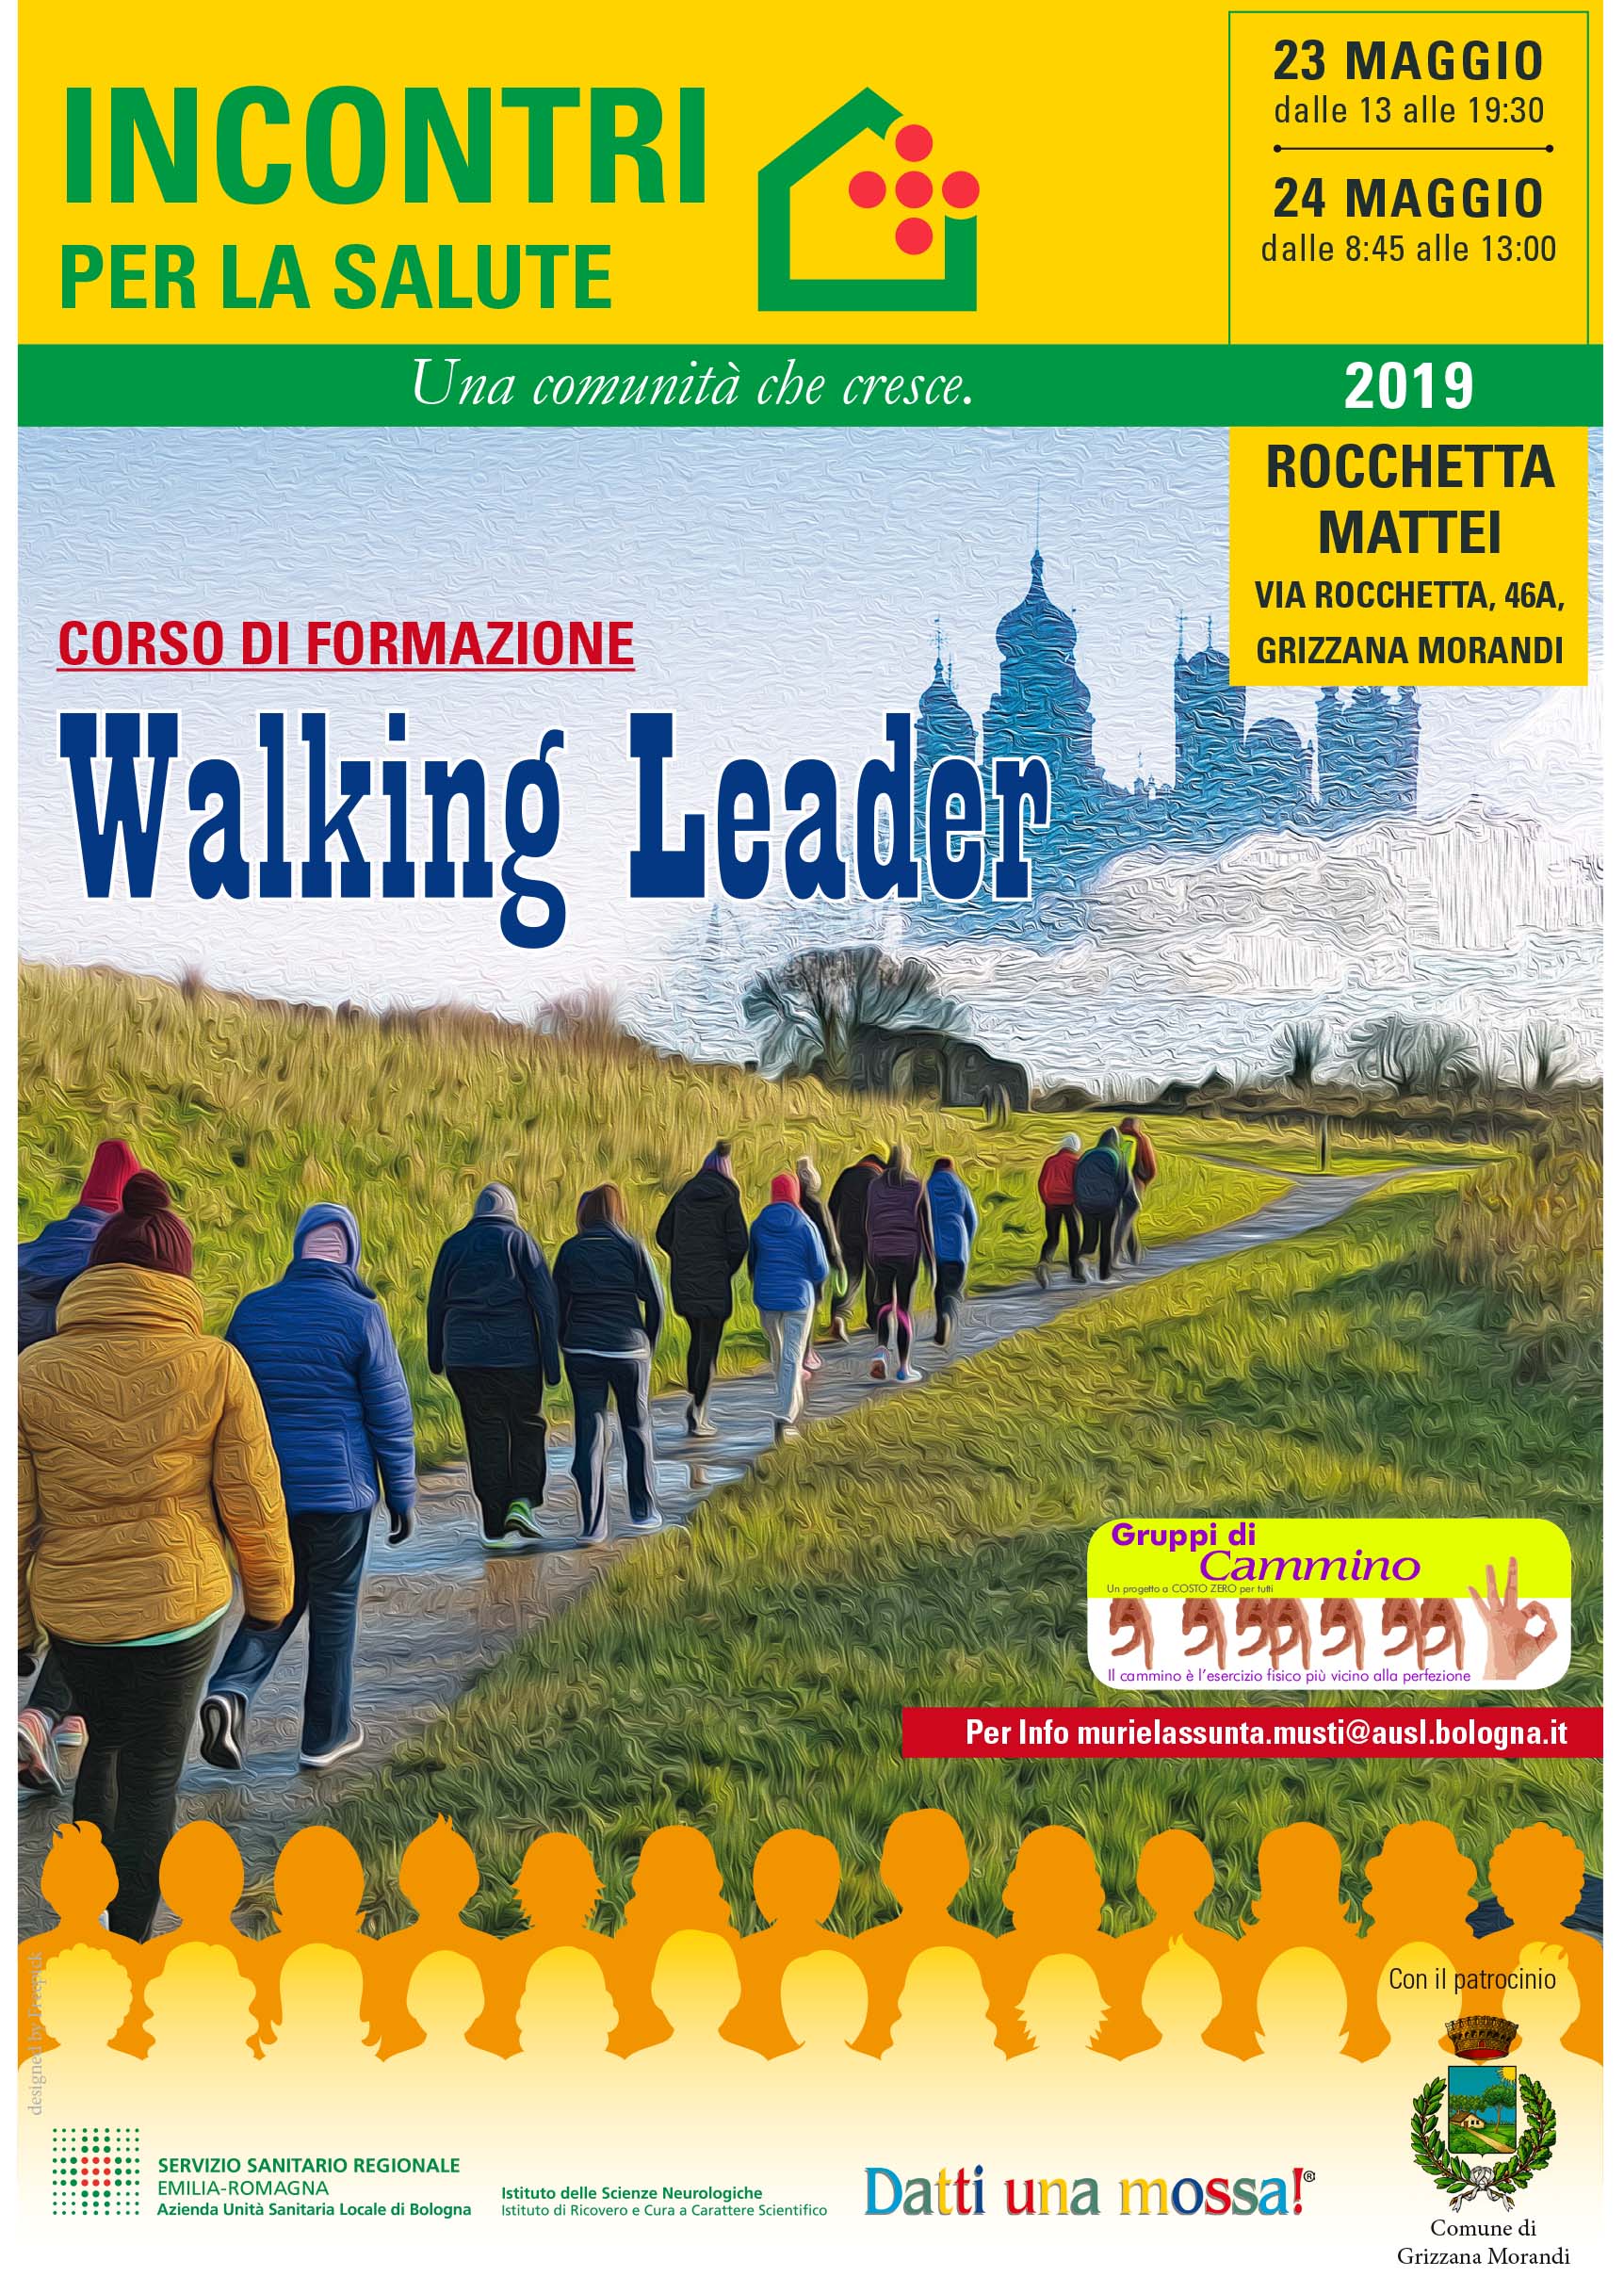 Corso Walking leader 2019 - Rocchetta Mattei